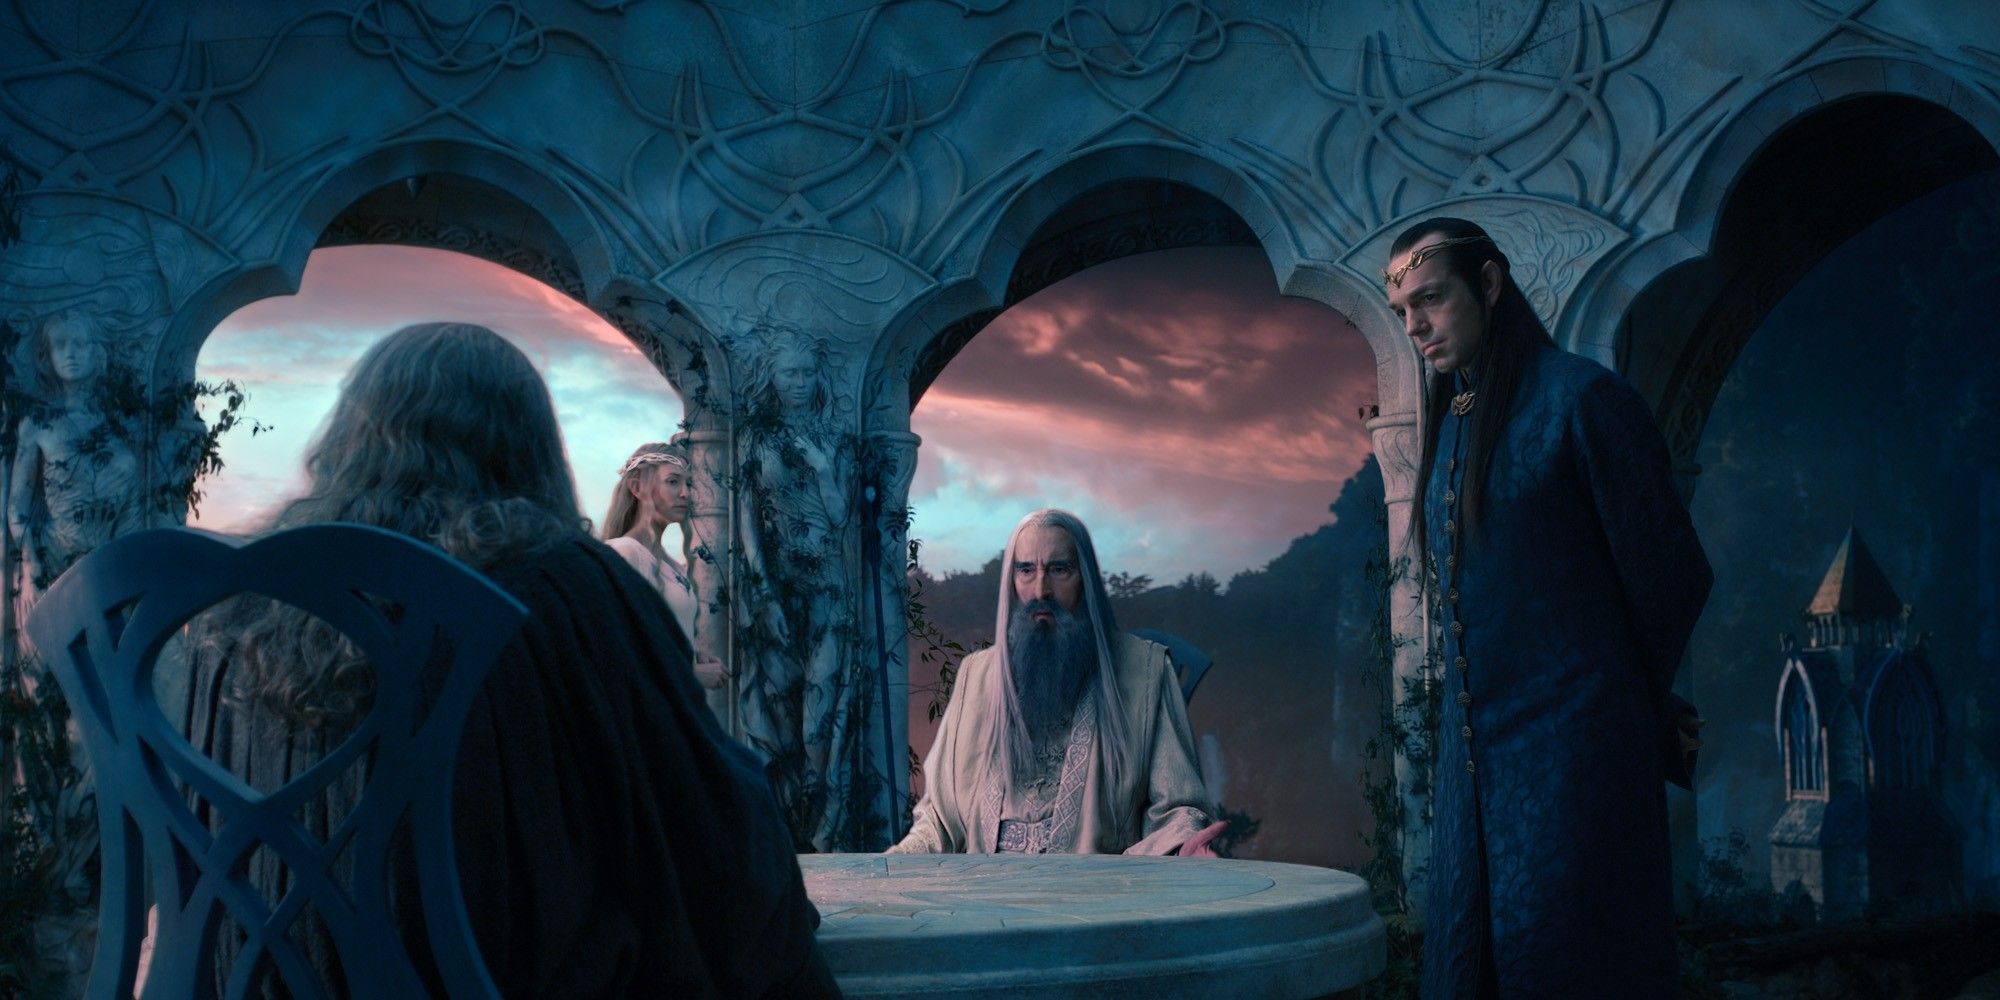 Ian-McKellen-as-Gandalf-Christopher-Lee-as-Saruman-Hugo-Weaving-as-Elrond-and-Cate-Blanchett-as-Galadriel-in-The-Hobbit